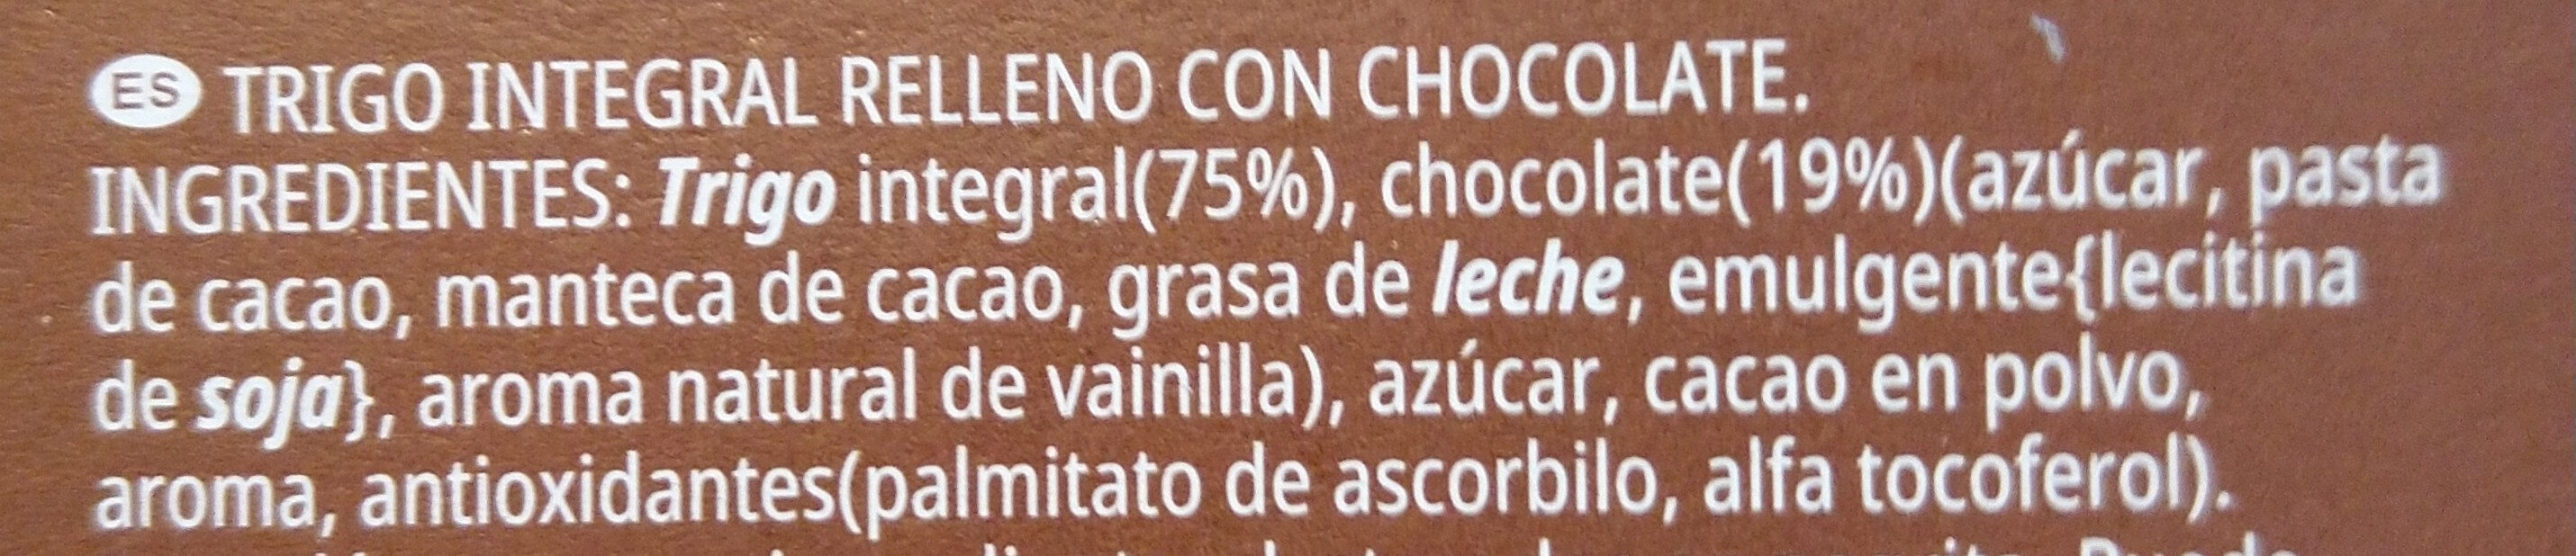 All-bran Choco - Cereales Con Chocolate - Ingredientes